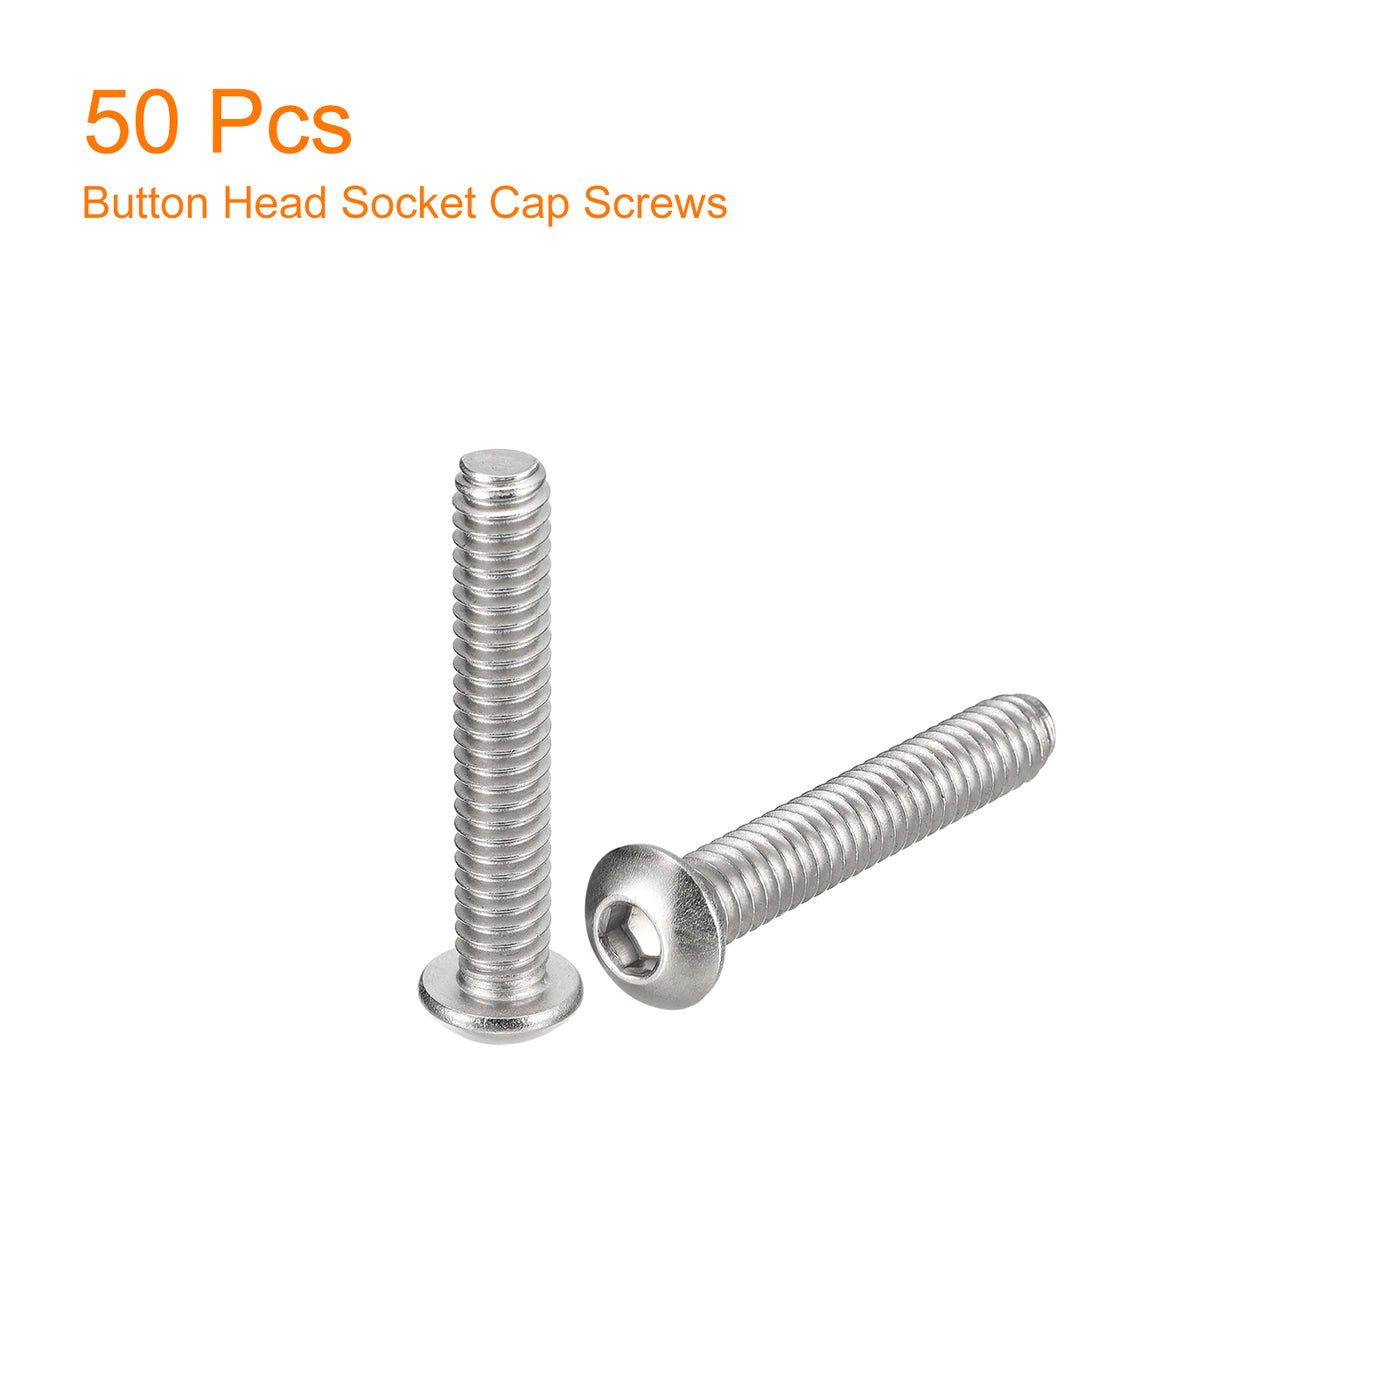 uxcell Uxcell 1/4-20x1-1/2" Button Head Socket Cap Screws, 50pcs 304 Stainless Steel Screws